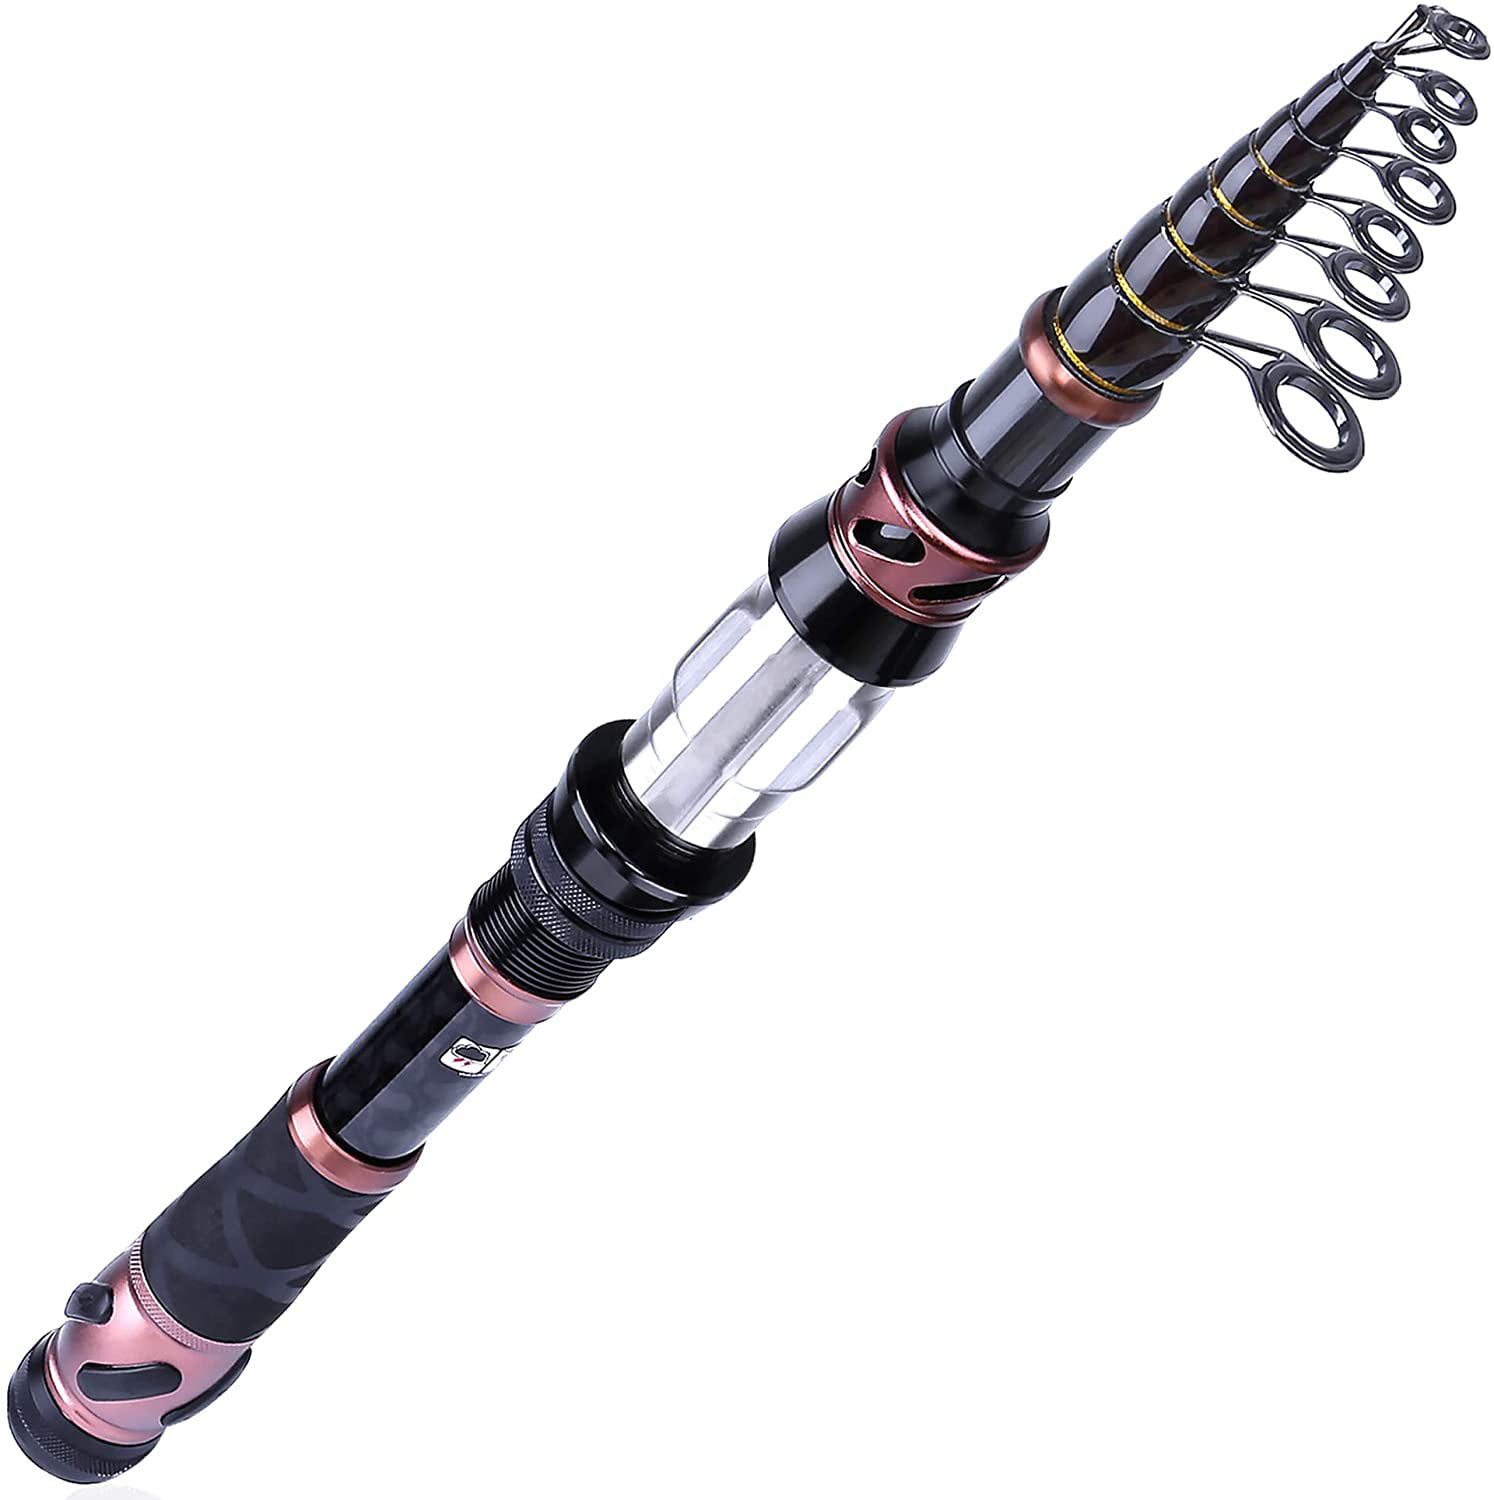 PLUSINNO Telescopic Fishing Rod Retractable Fishing Pole Rod